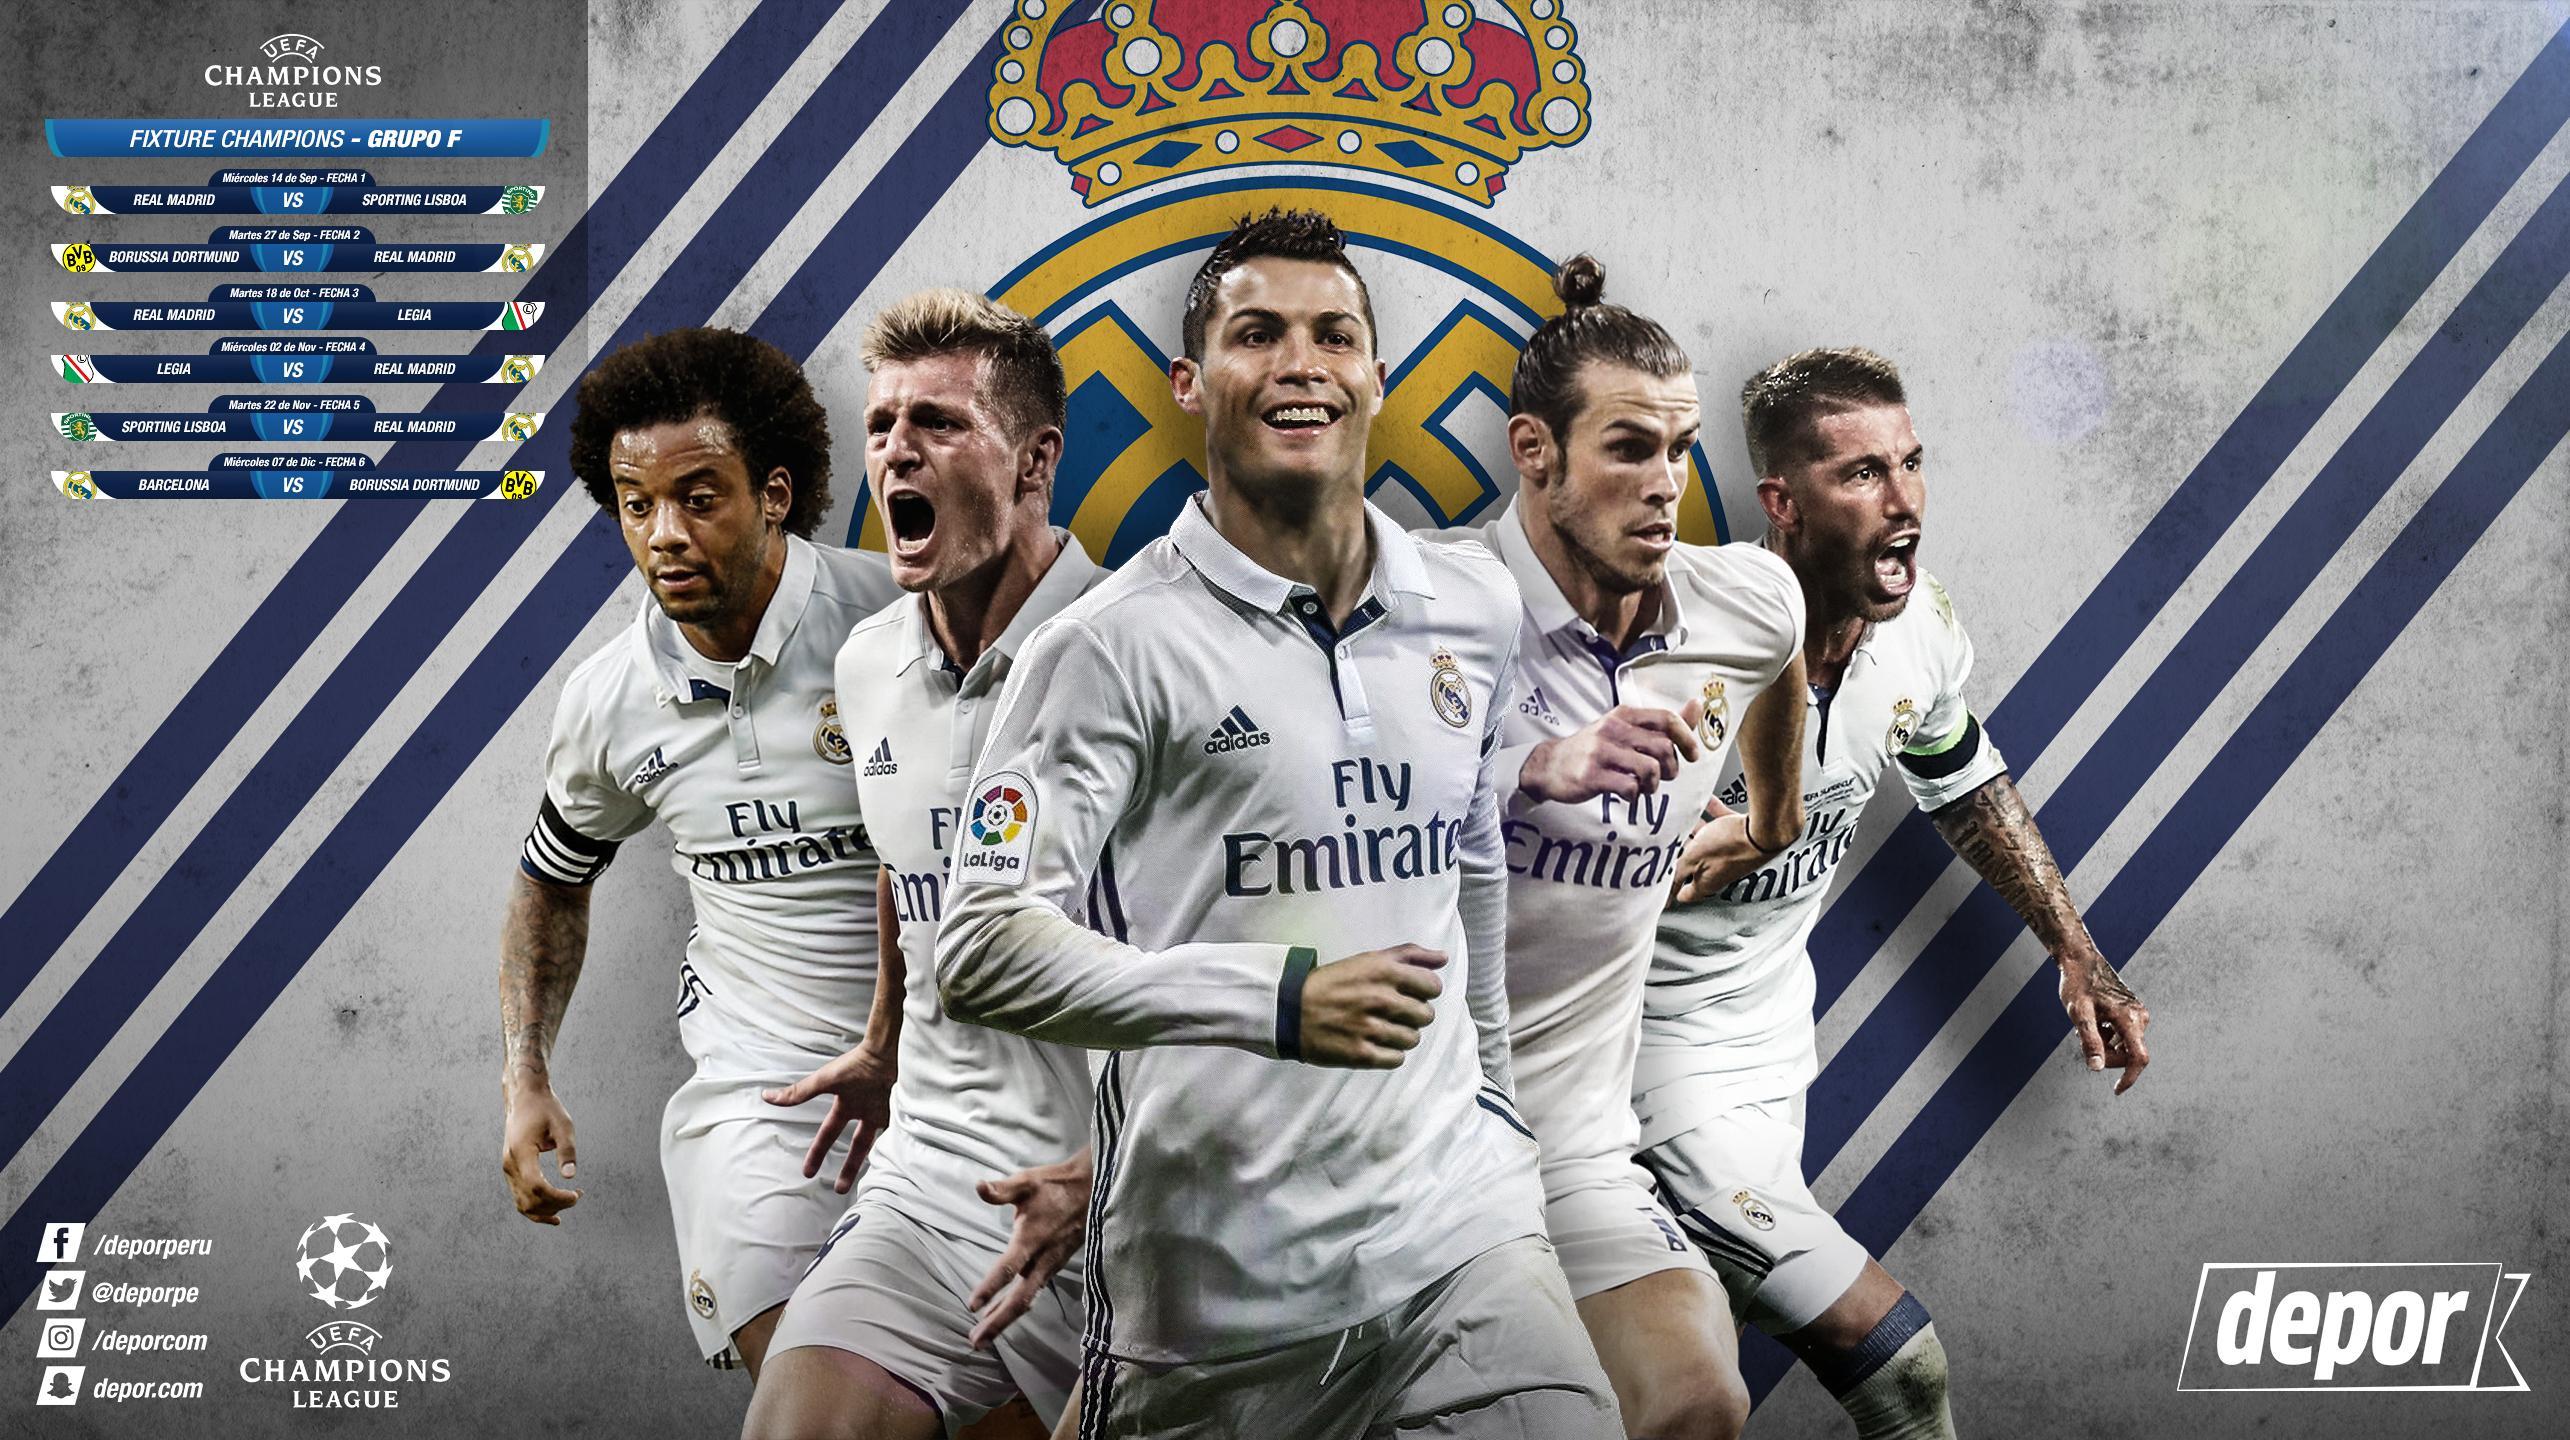 Champions League: descarga gratis el Wallpaper del Real